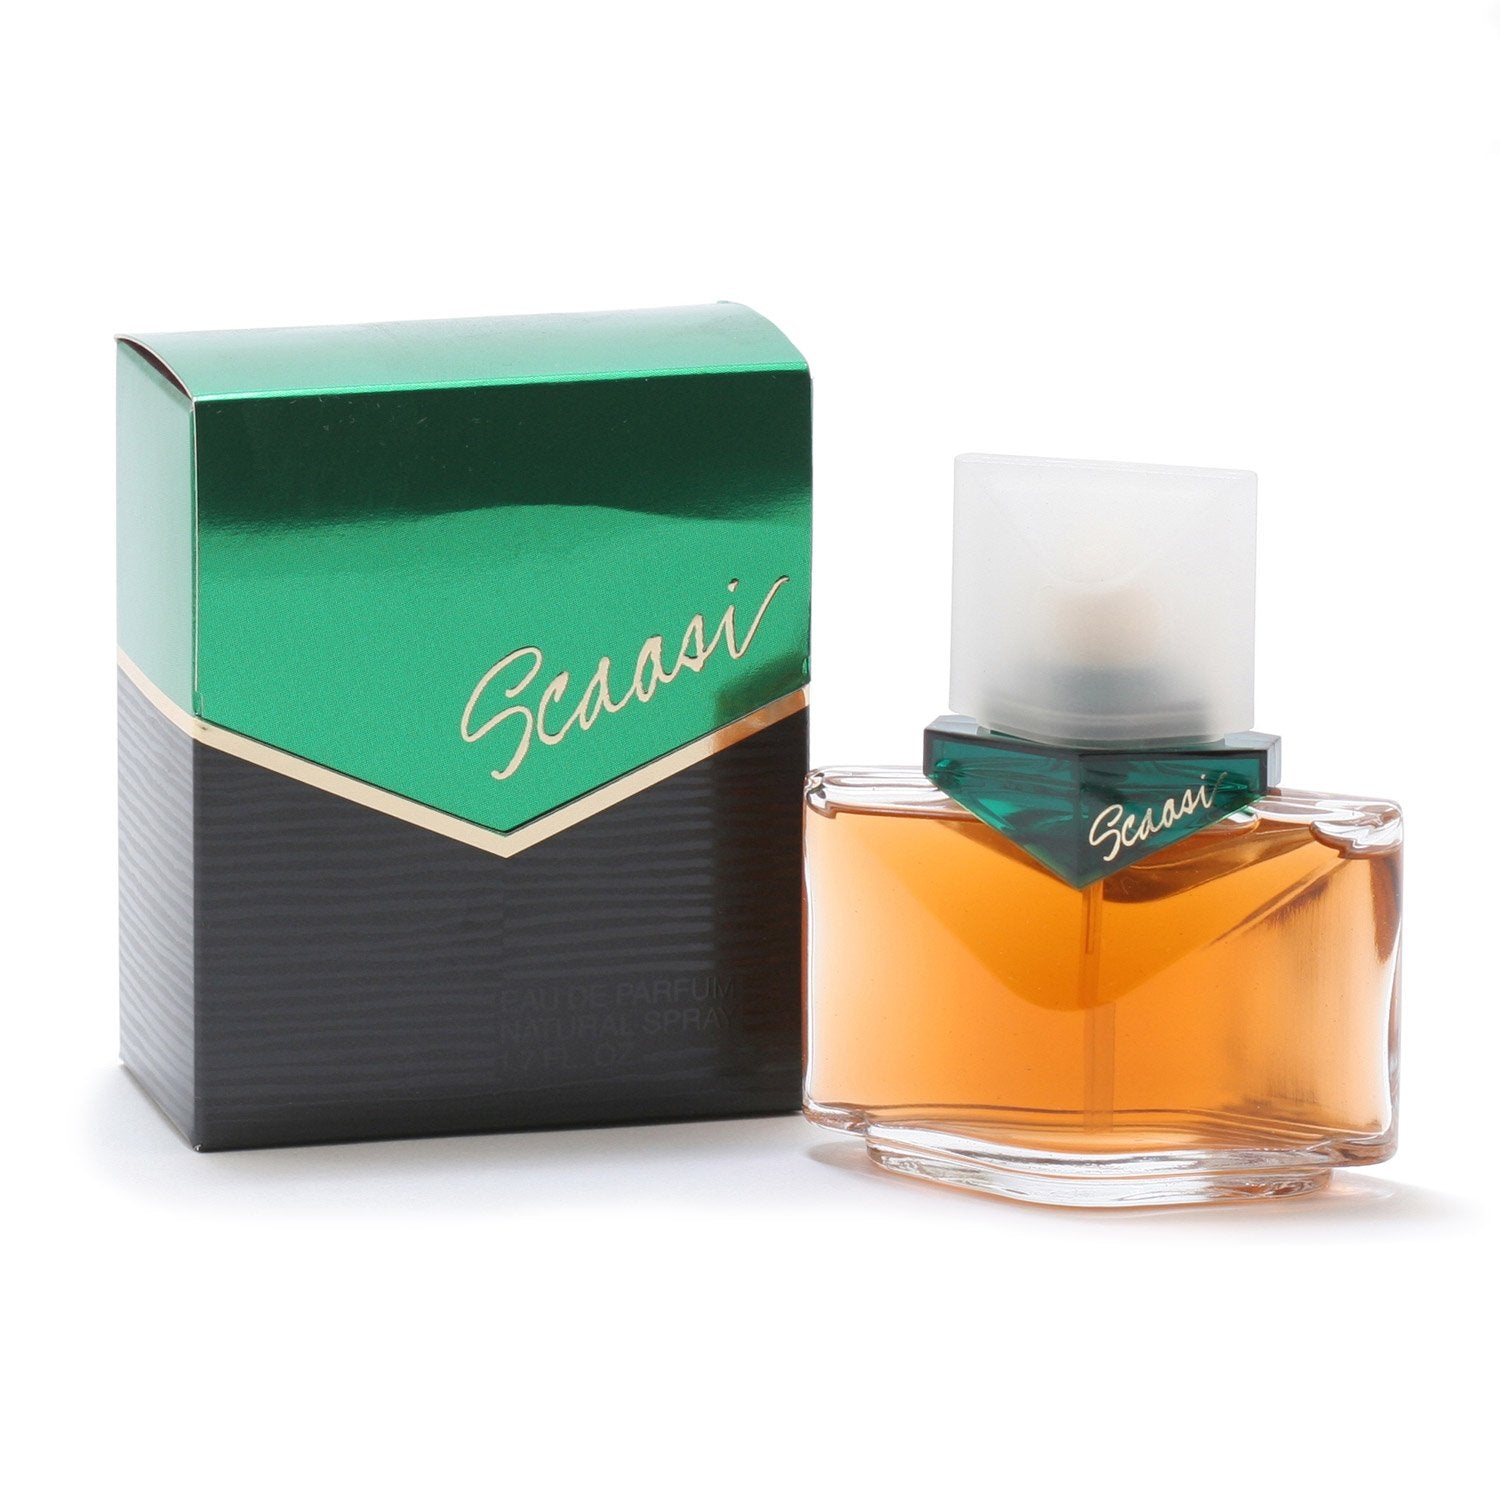 Perfume - SCAASI FOR WOMEN - EAU DE PARFUM SPRAY, 1.7 OZ